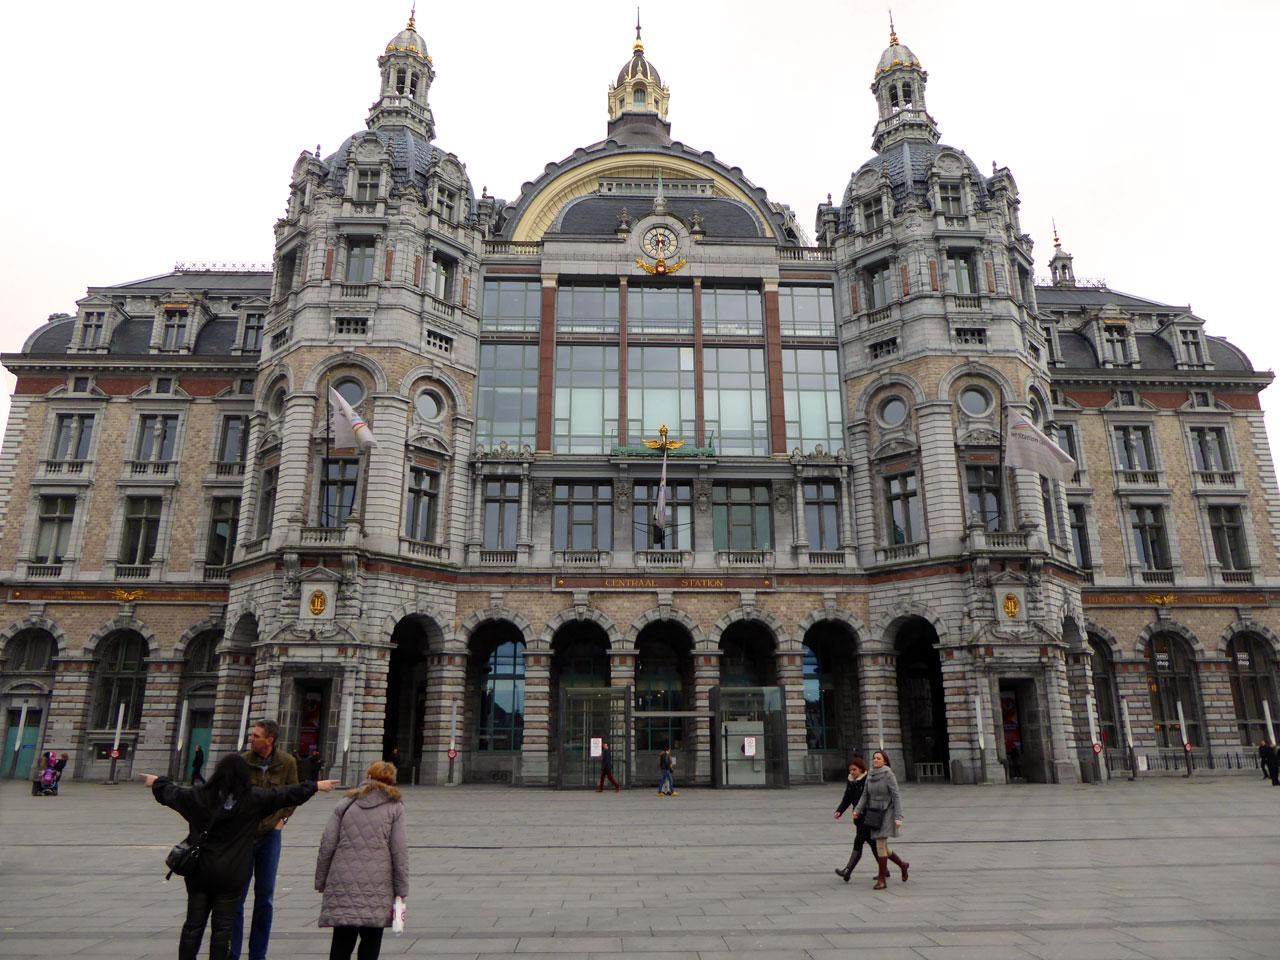 Centraal Station, Antwerp